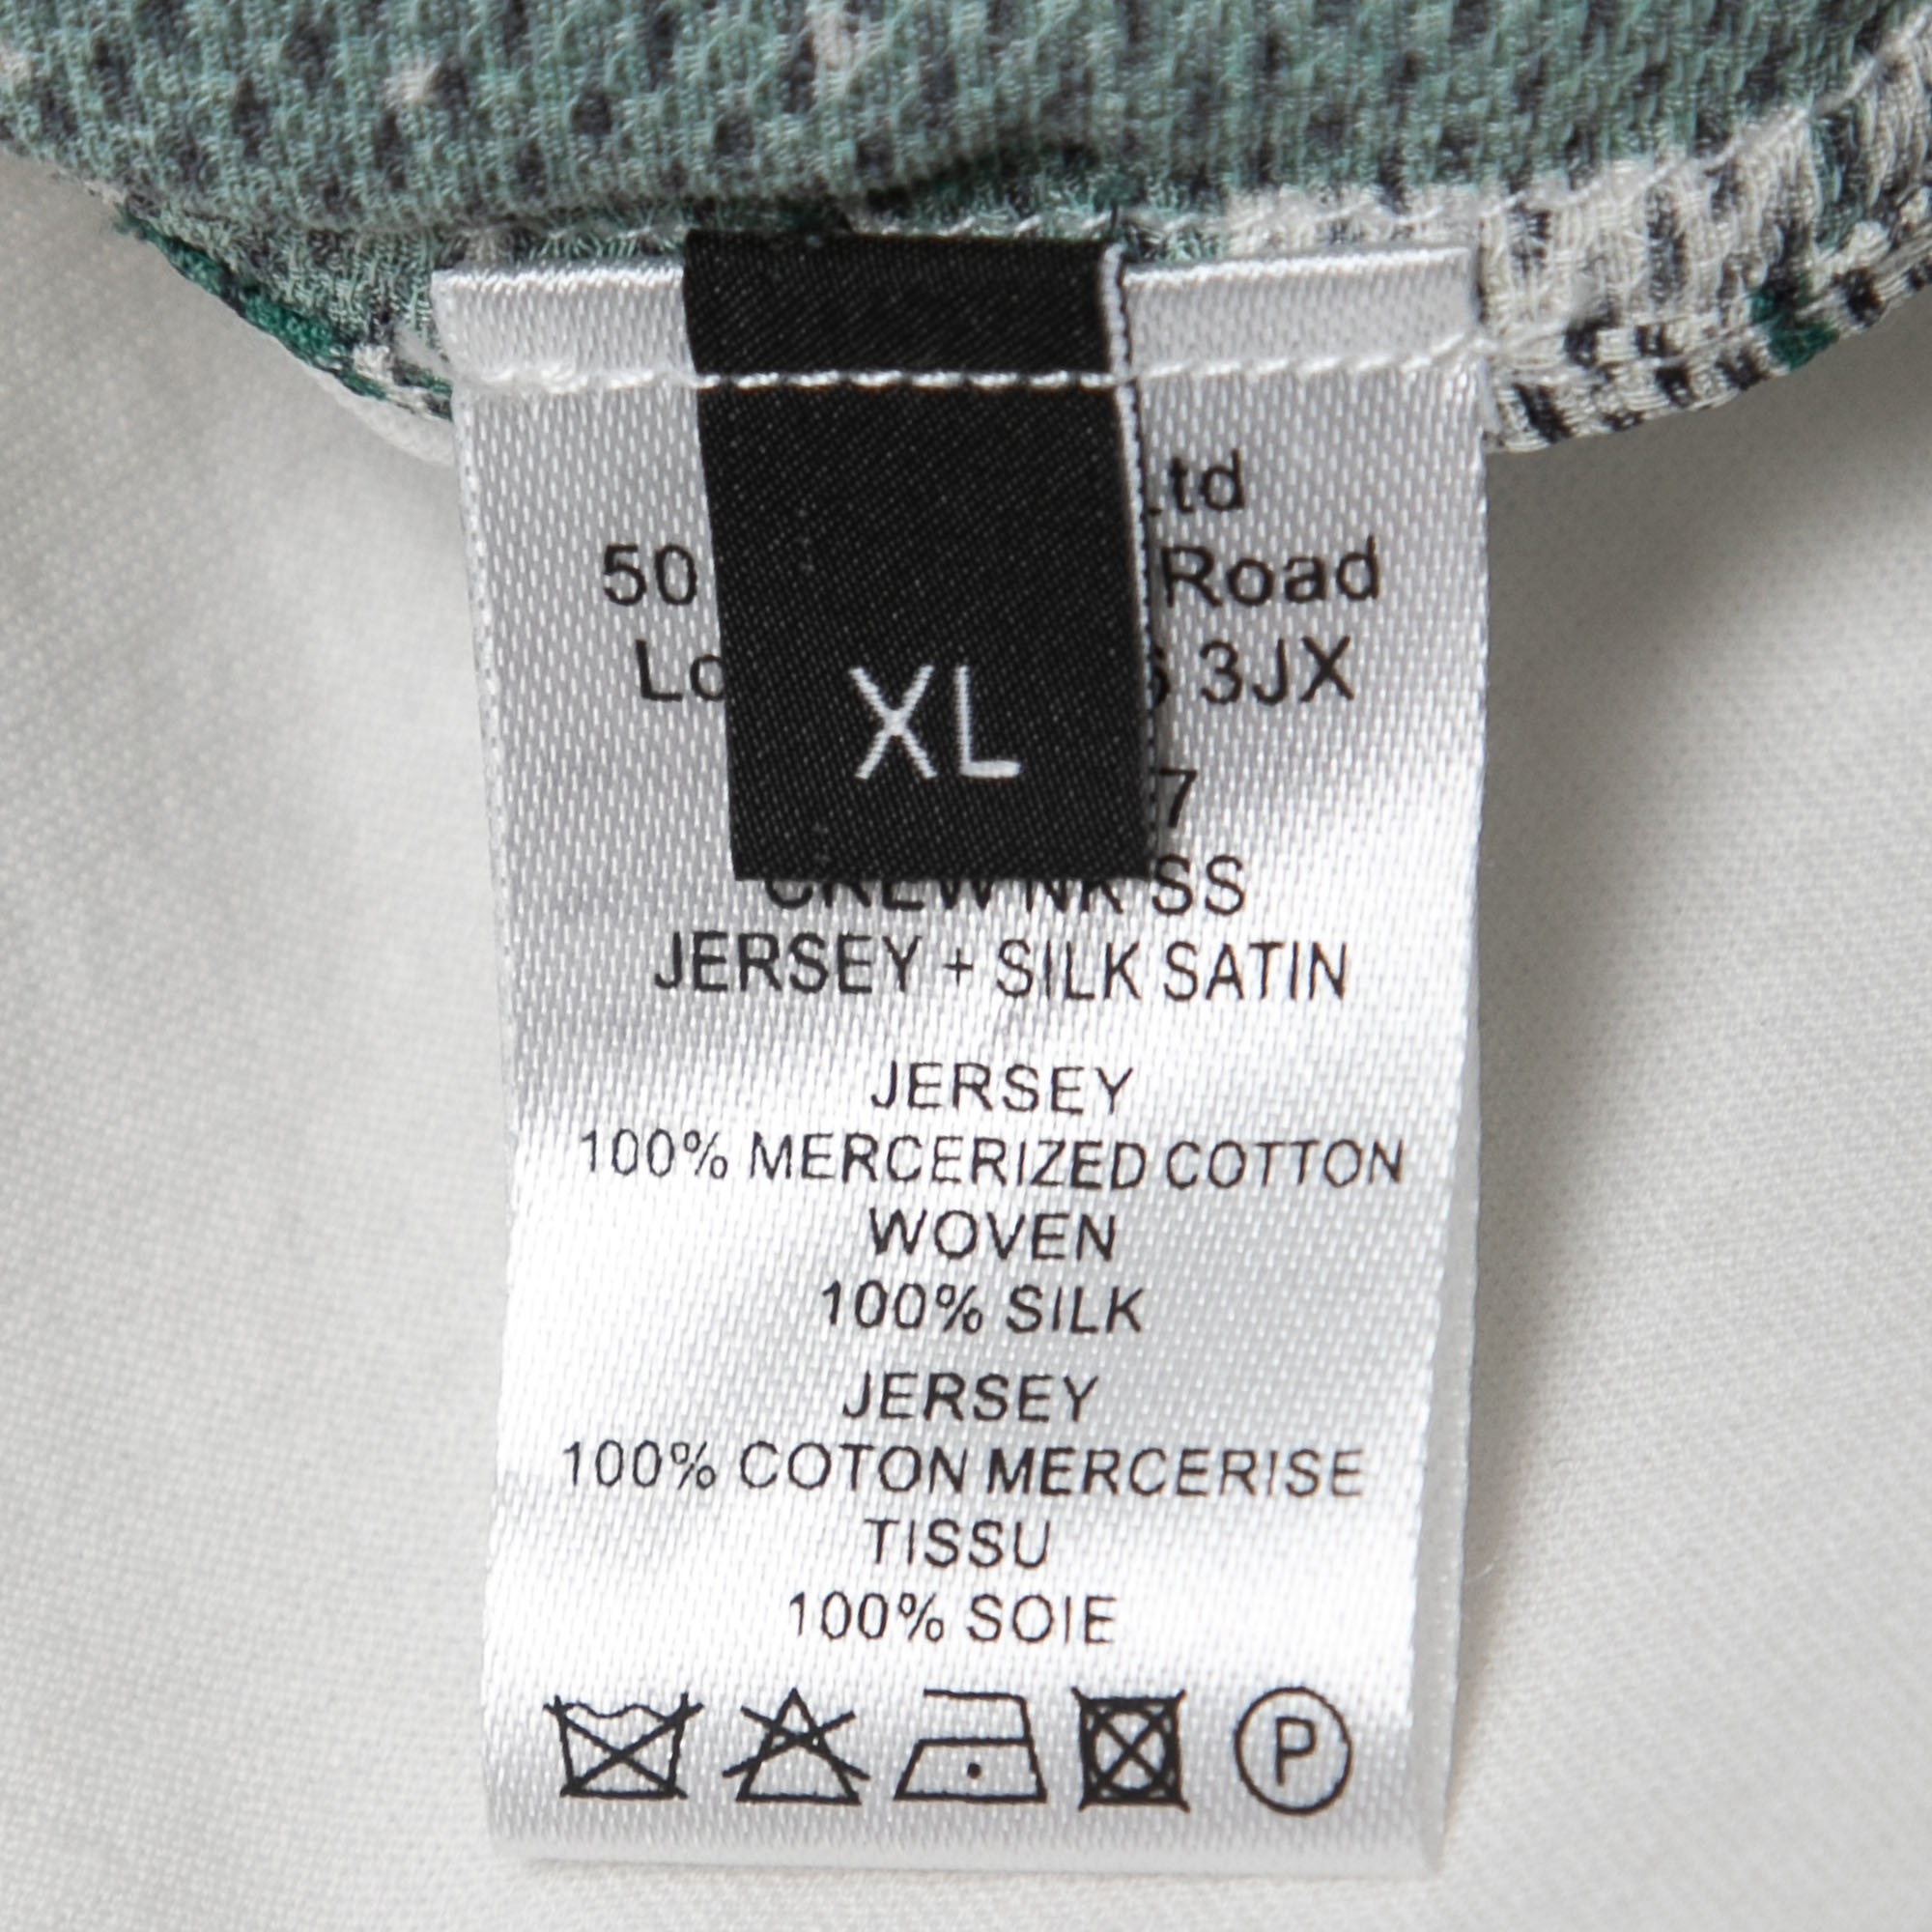 Joseph Green Checked Jersey & Silk Strap Detail Top XL